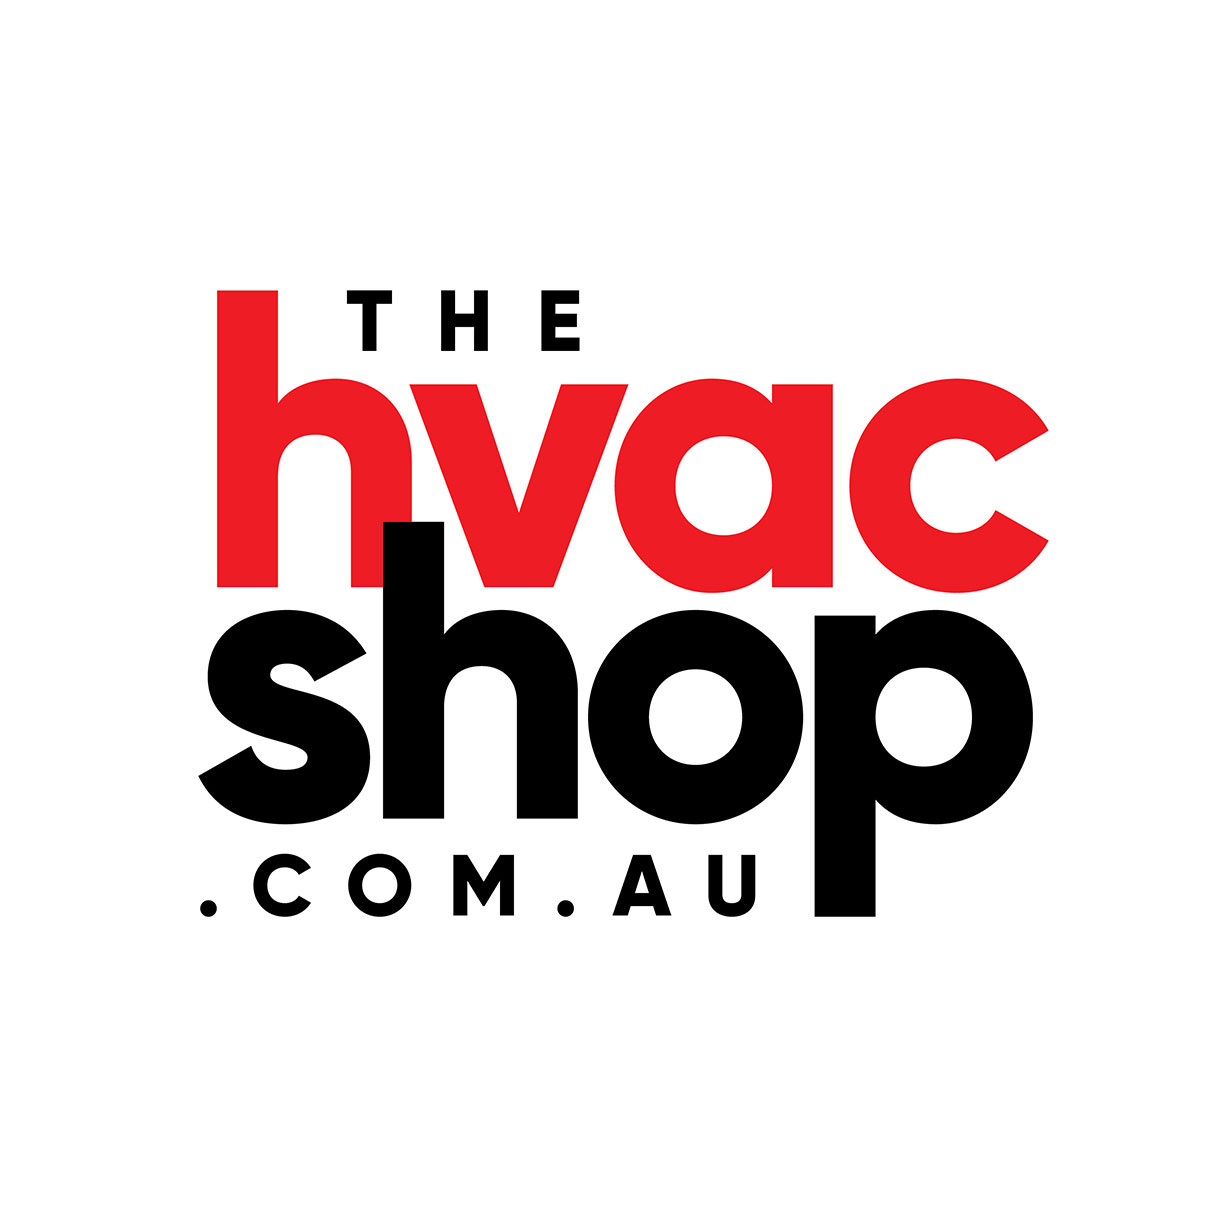 The HVAC Shop - Home to Quality Tools & Equipment!